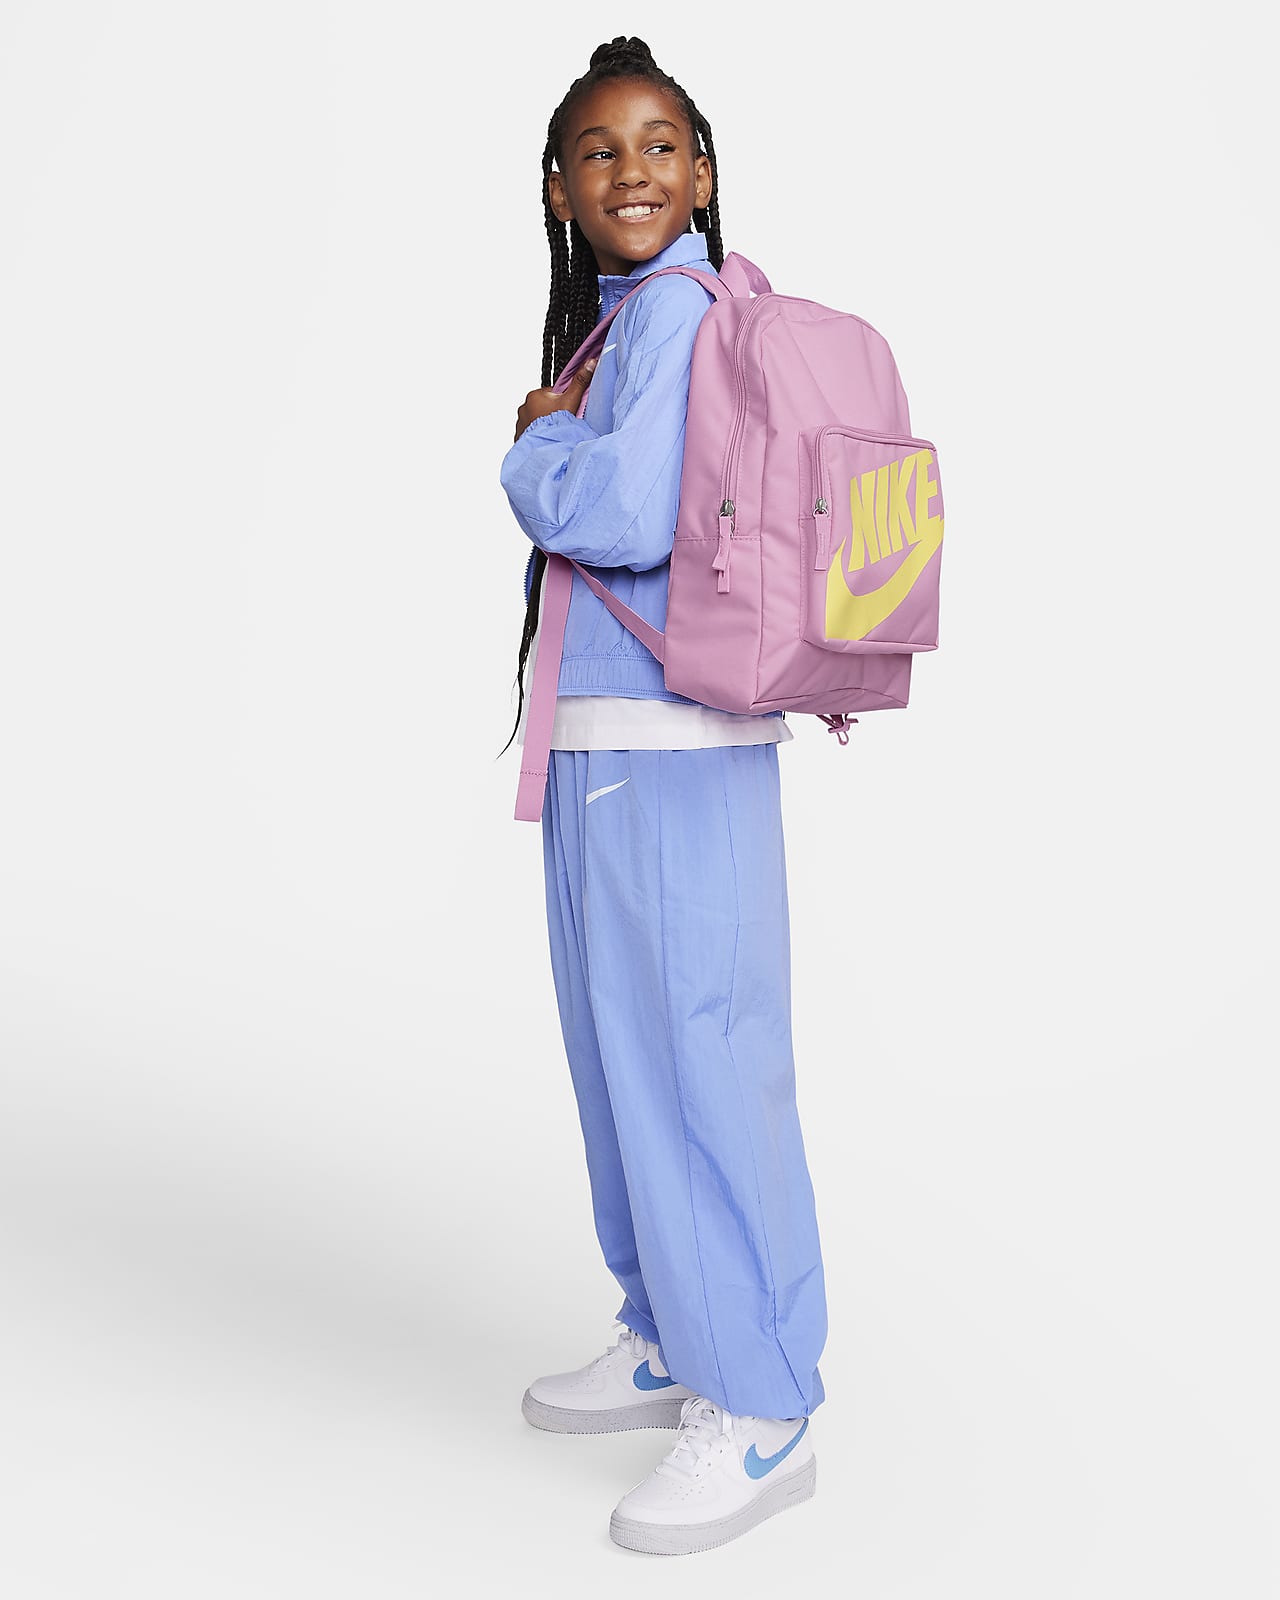 Kids Backpacks | Great for School | Official LEGO® Shop US